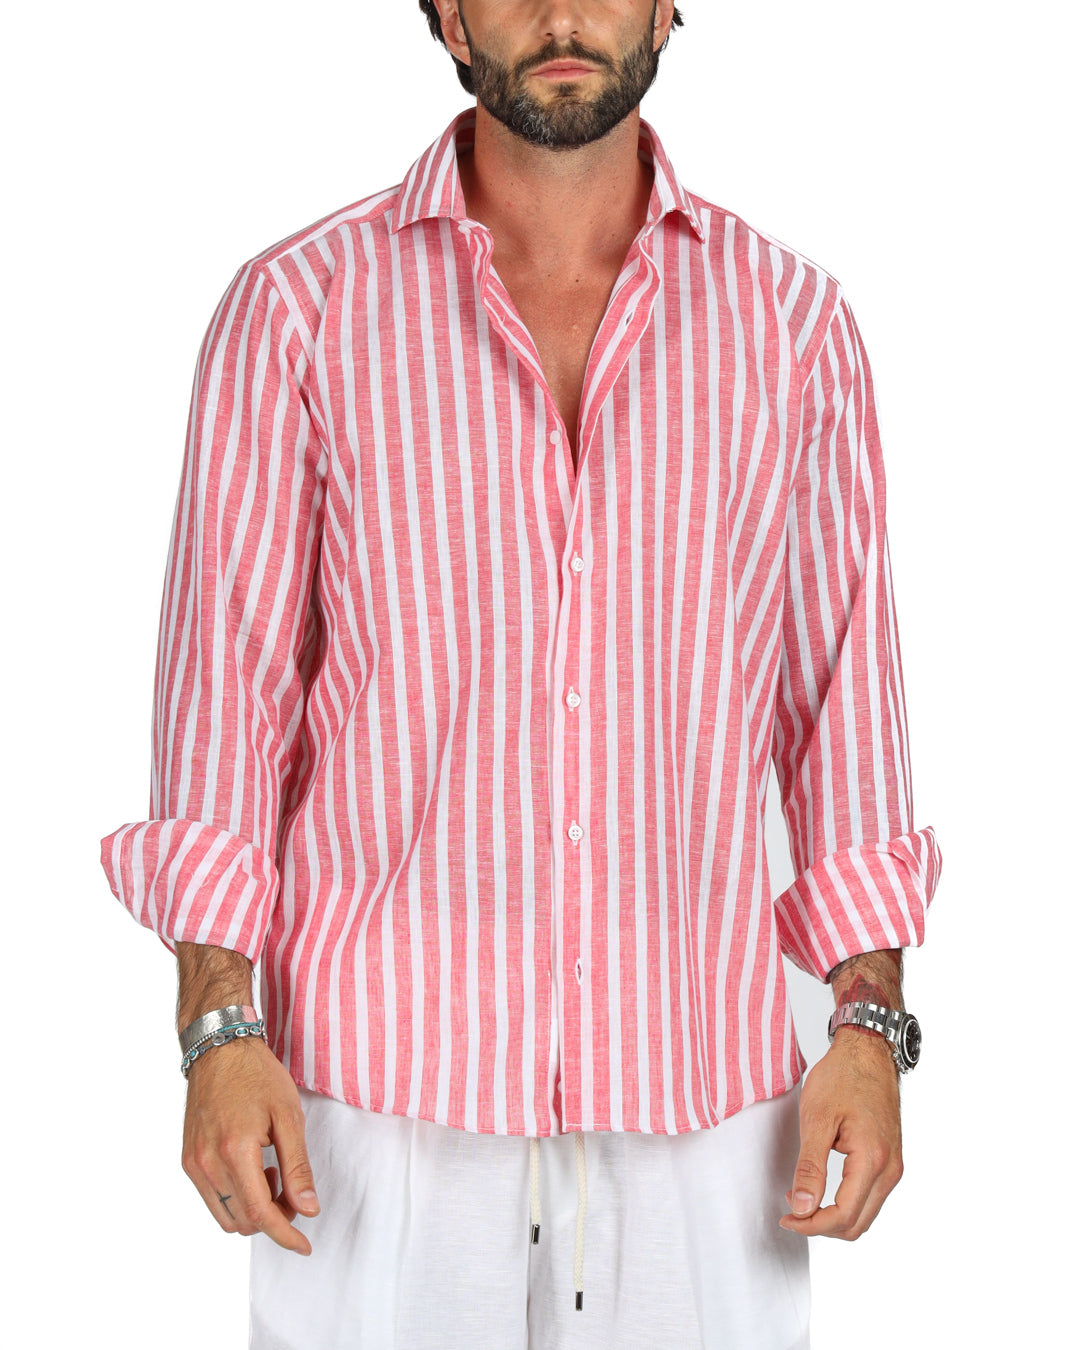 Procida - Classic red wide striped linen shirt